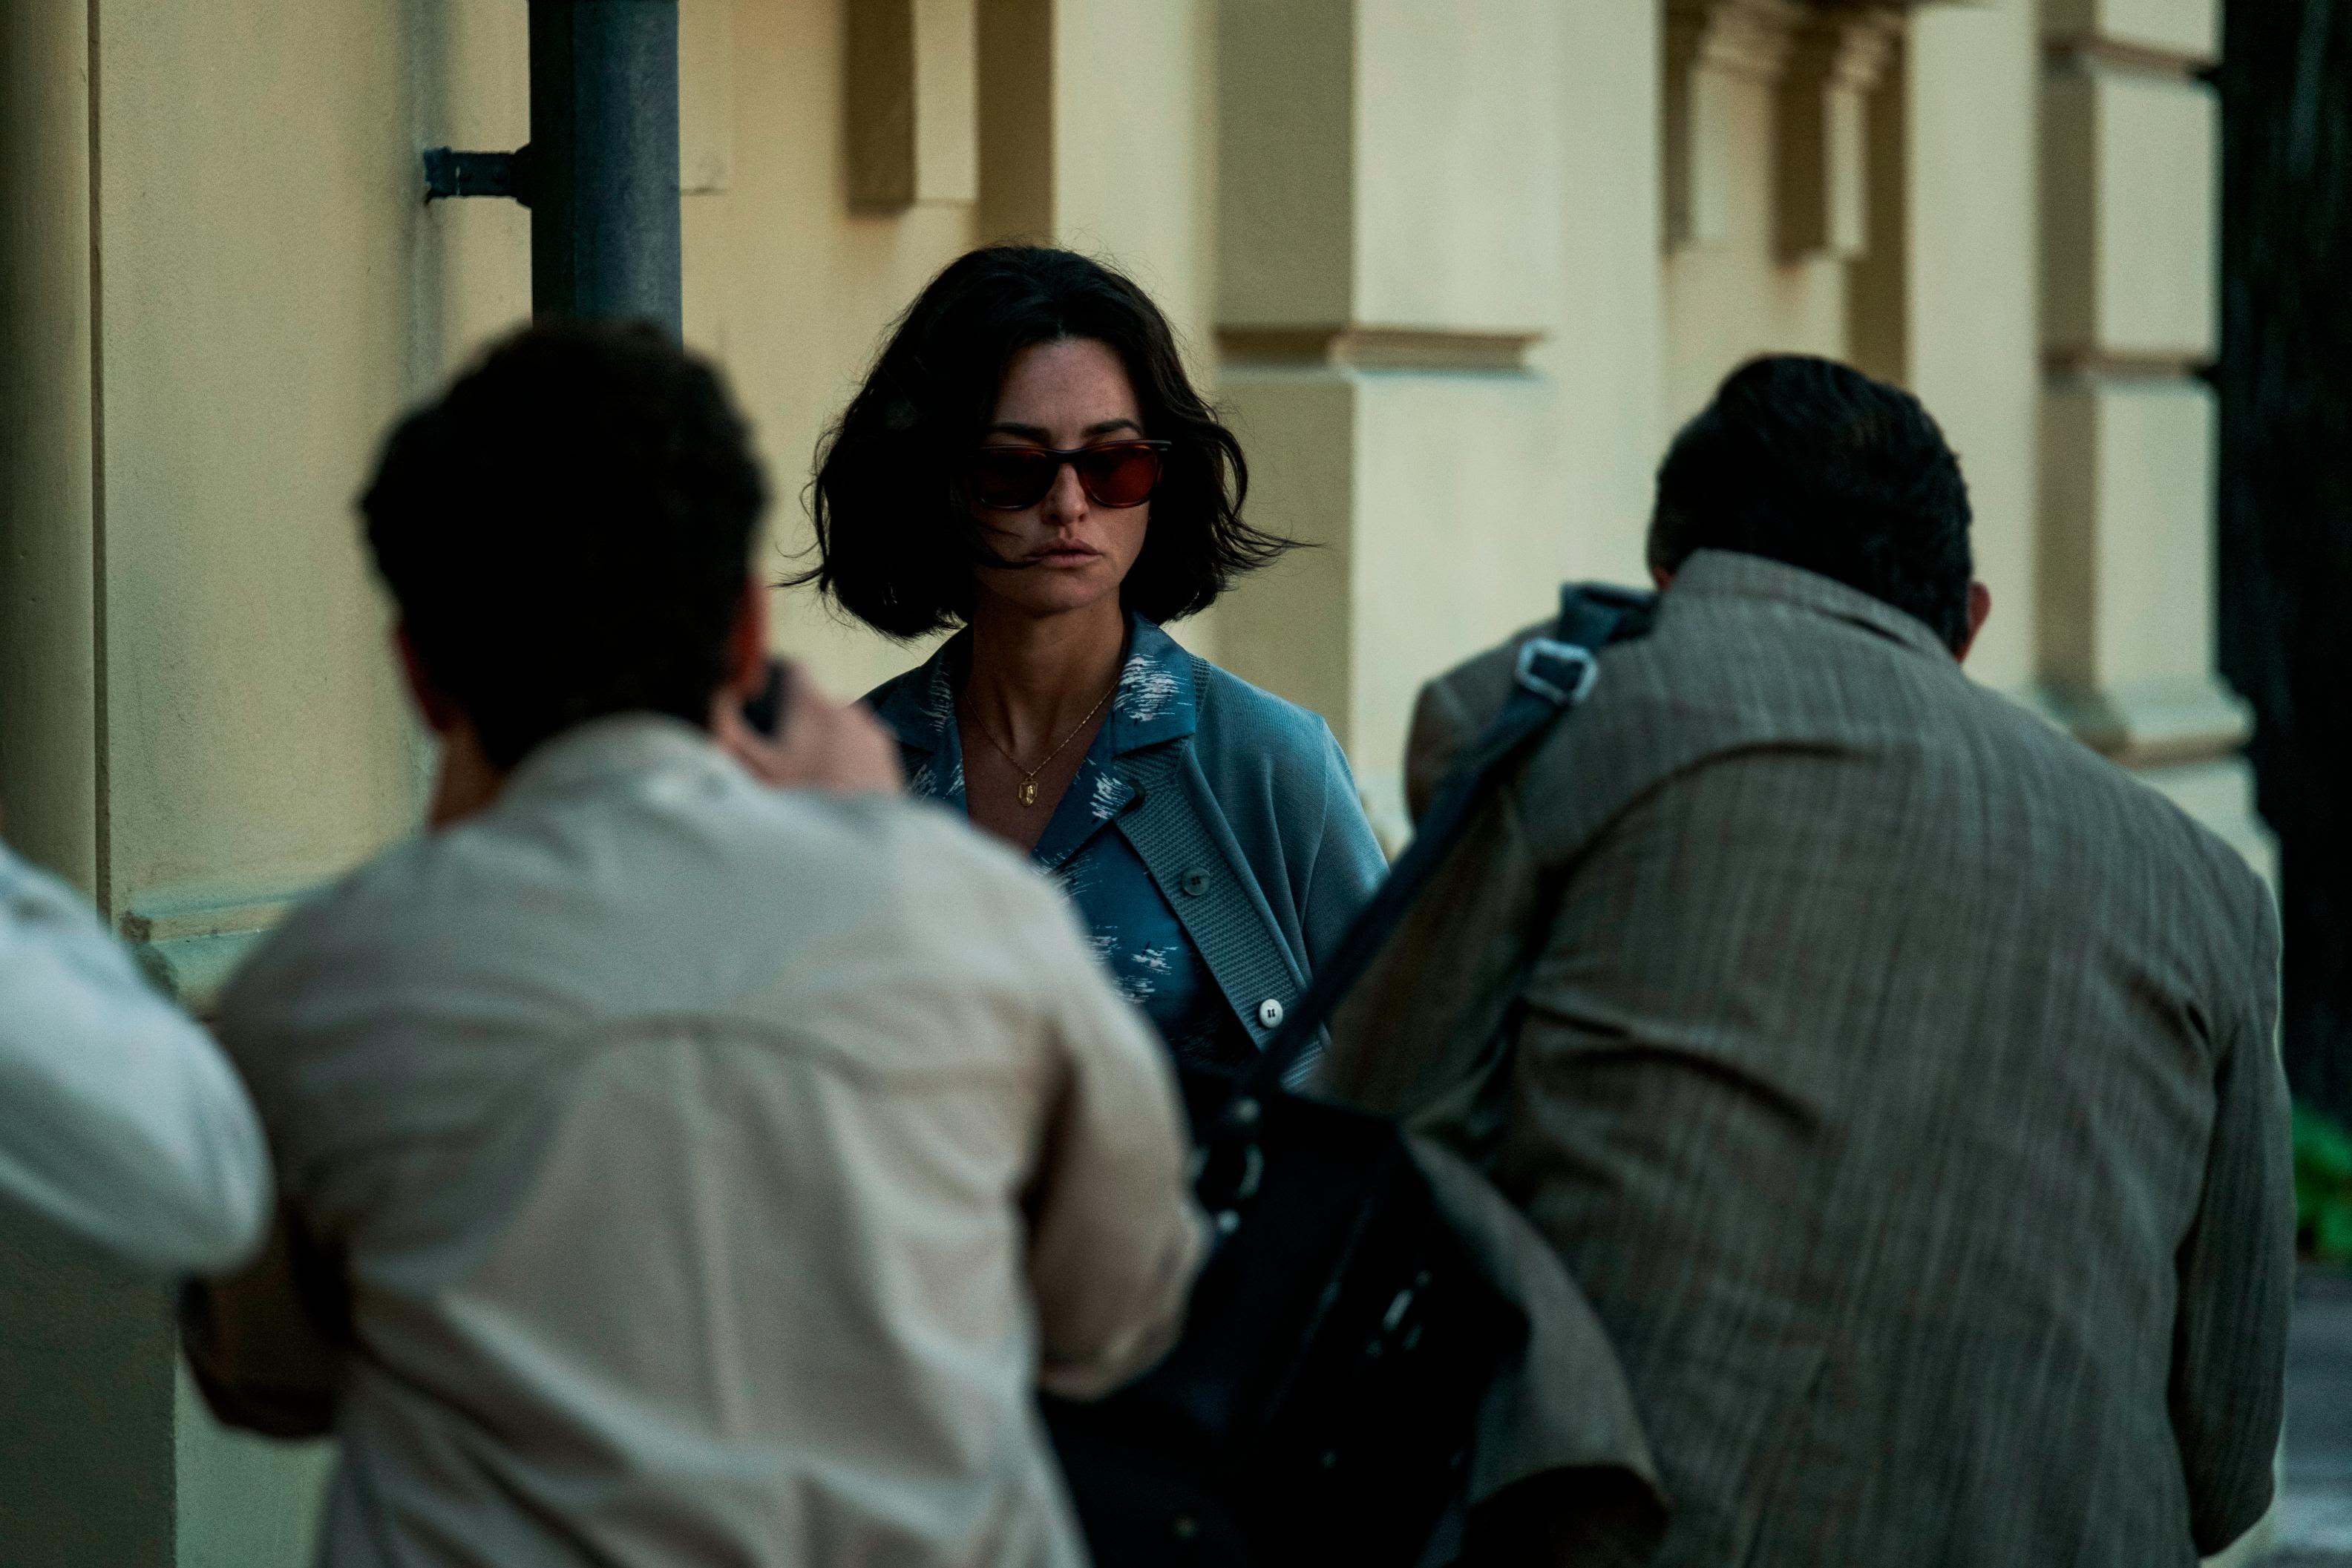 Laura Ferrari, Enzo's wife, played by Penelope Cruz, in a scene set in Modena.